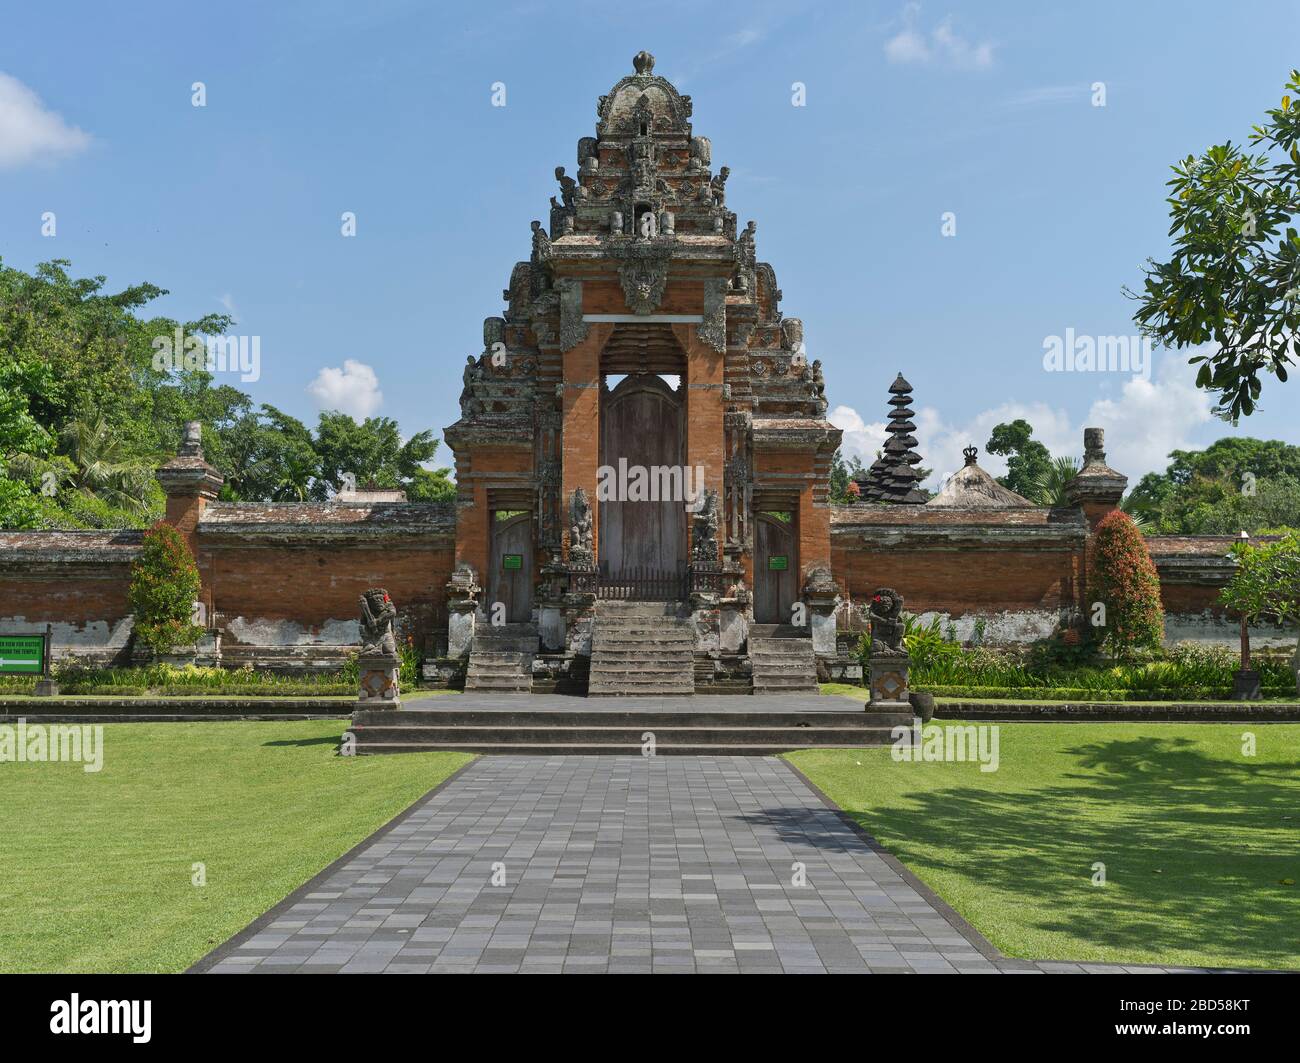 dh Pura Taman Ayun Königlicher Tempel BALI INDONESIEN Balinesischer Hindu Mengwi Tempel Paduraksa inneren sanctum Tor Turm hinduismus blauen Himmel Querformat Stockfoto